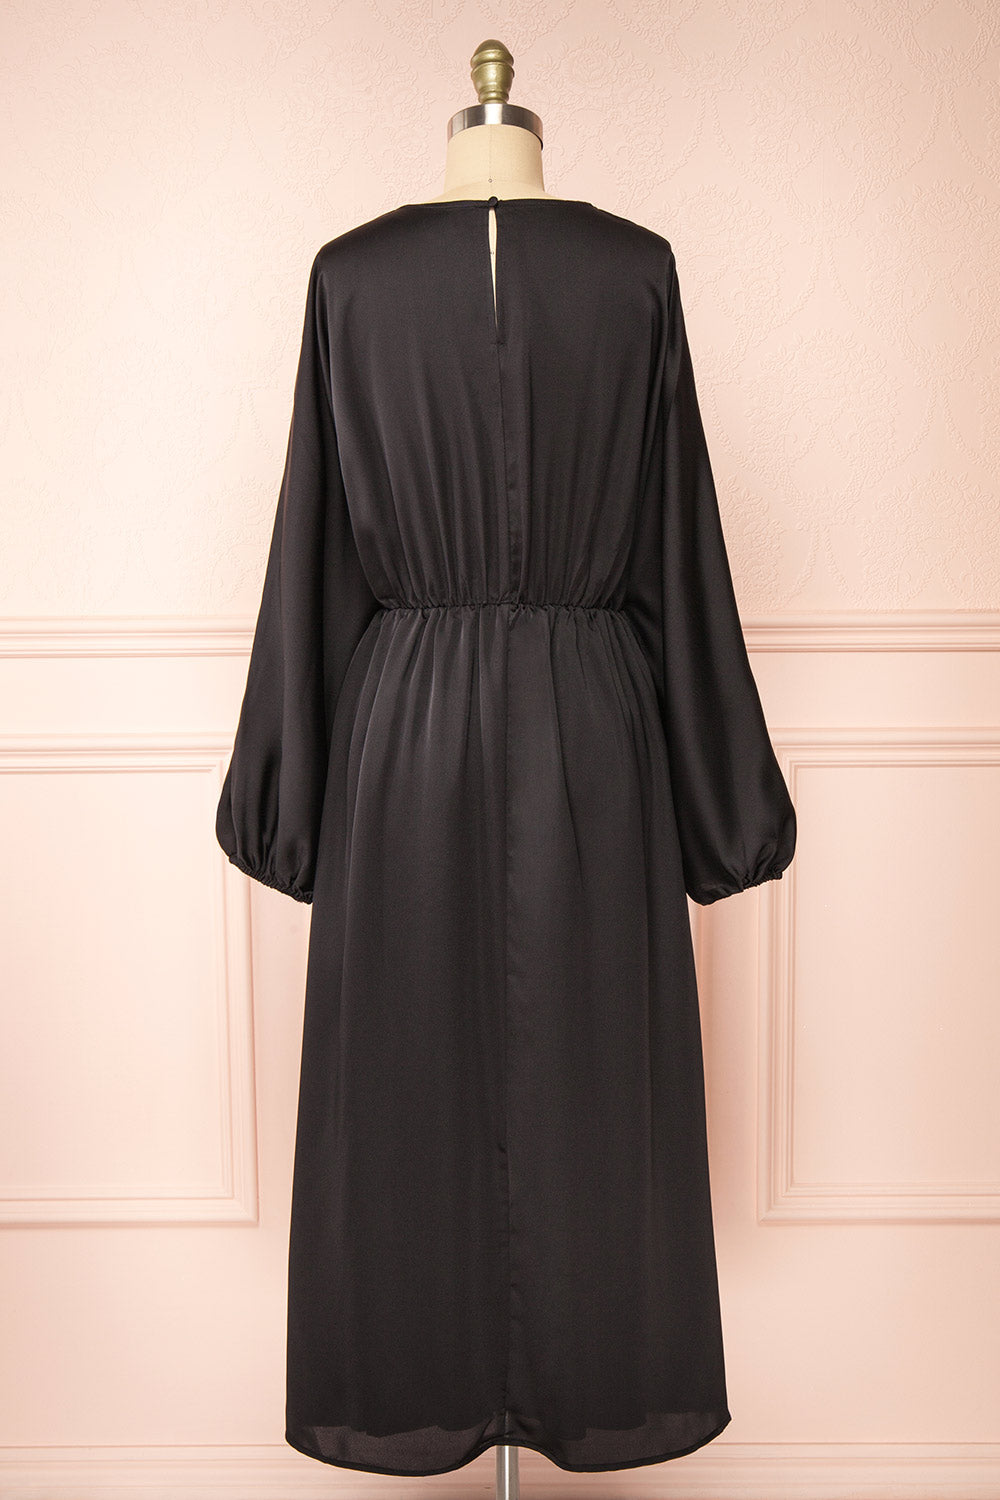 Reneane Black Long Sleeve Midi A-Line Dress | Boutique 1861 back view